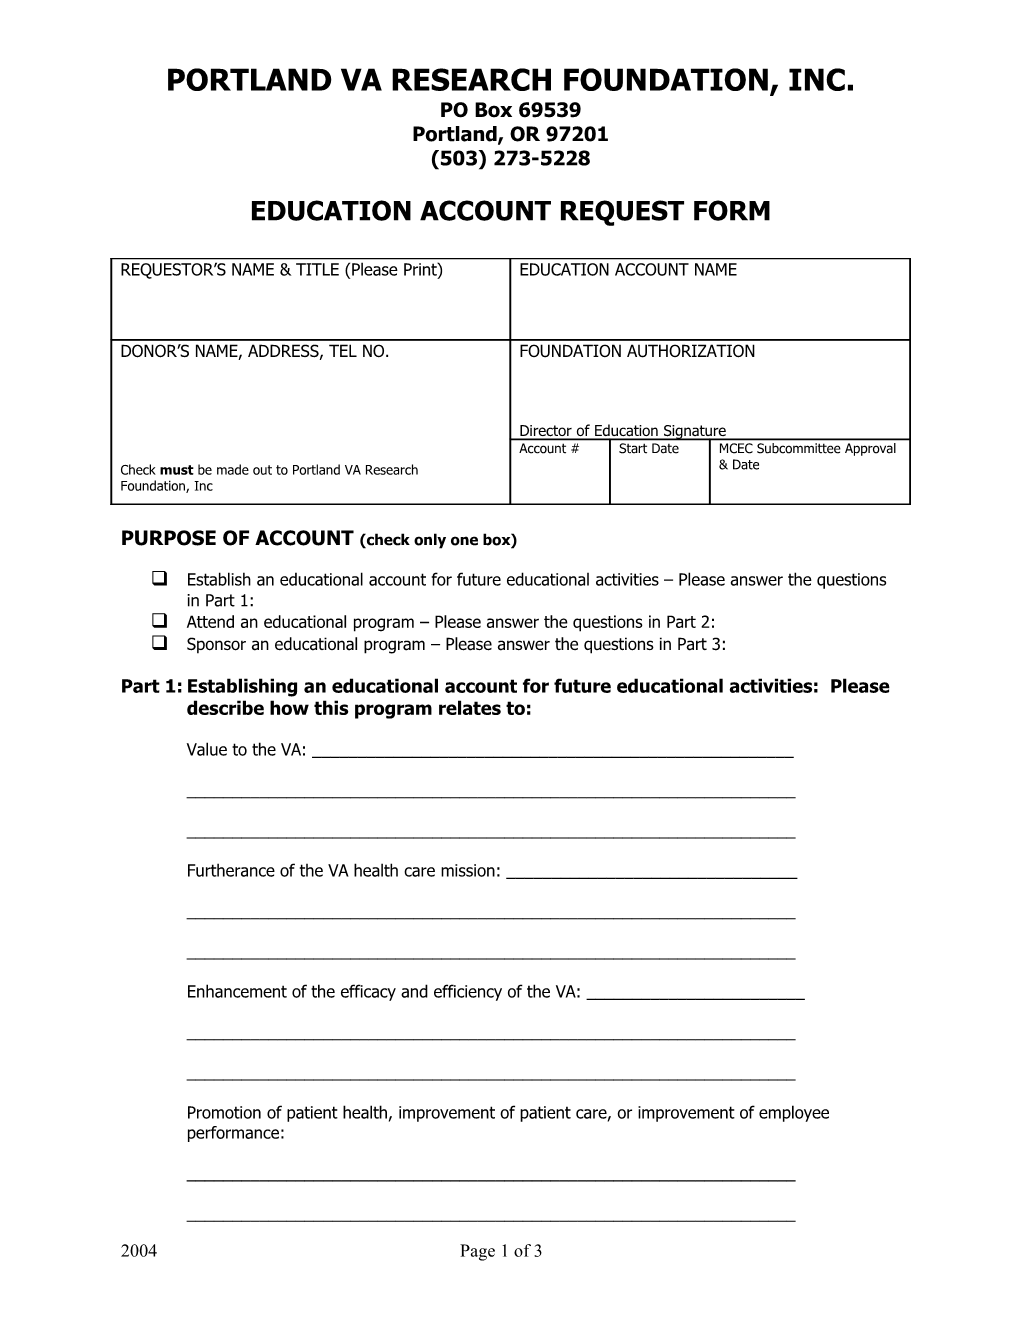 Education Account Request Form (Portland VA Research Foundation)